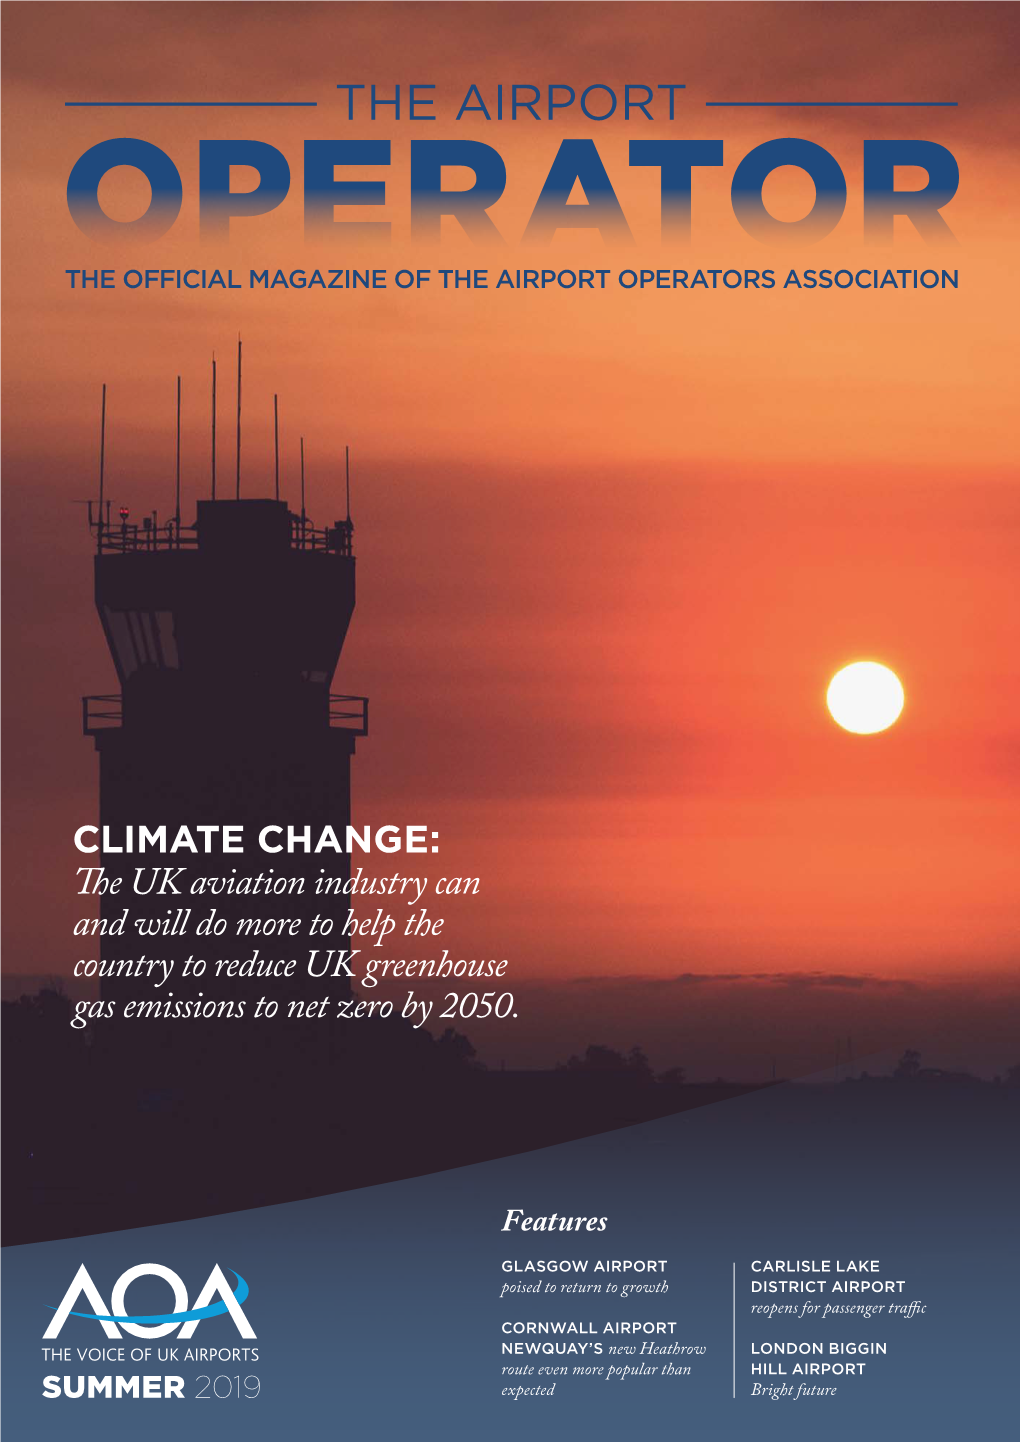 The Airport Operators Association